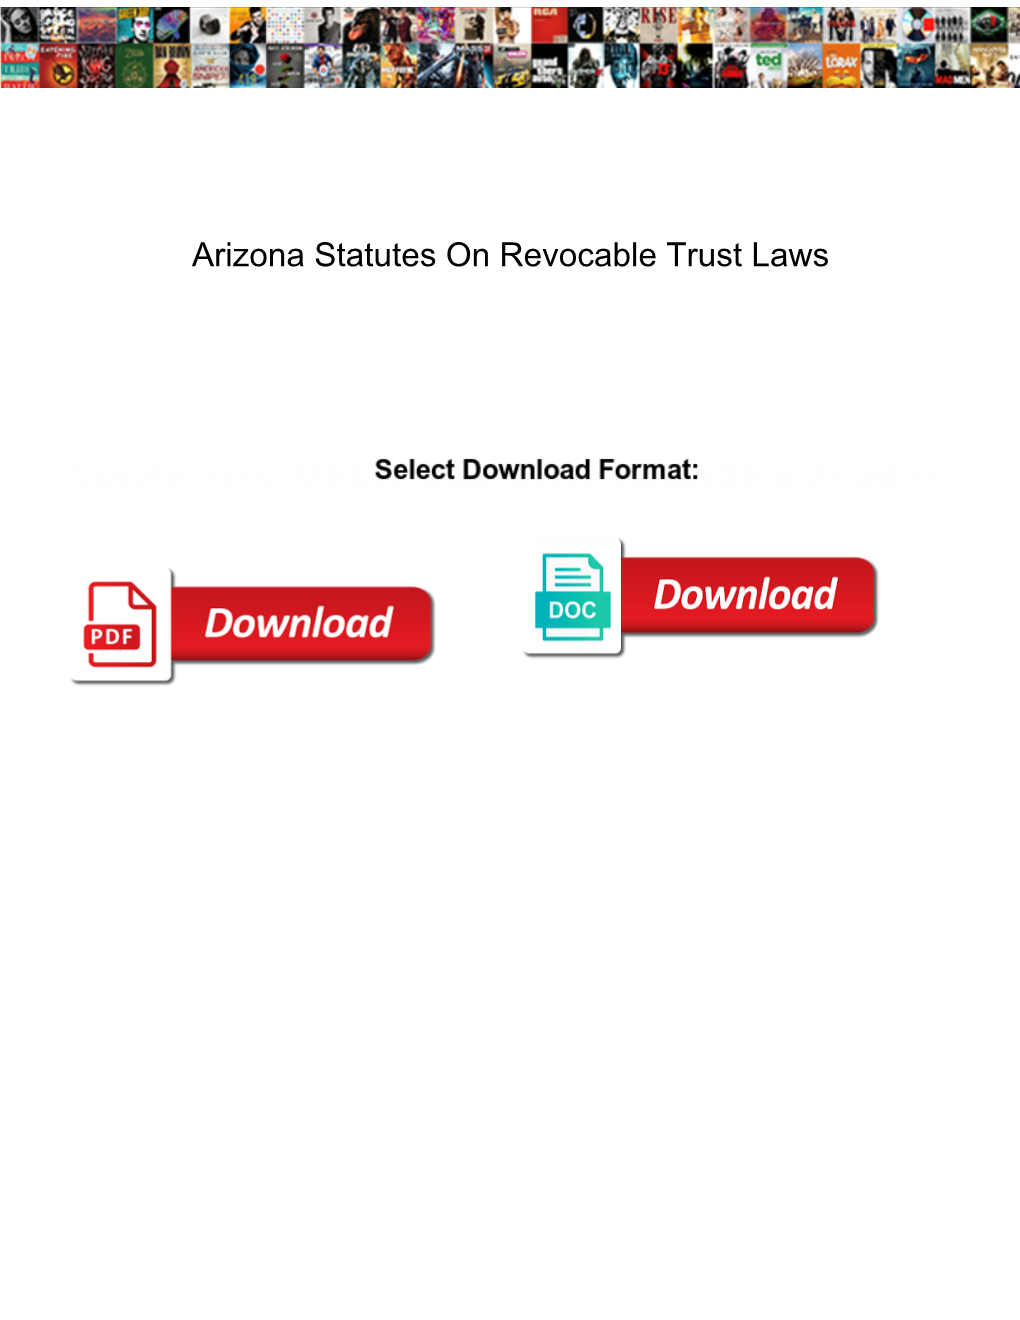 Arizona Statutes on Revocable Trust Laws